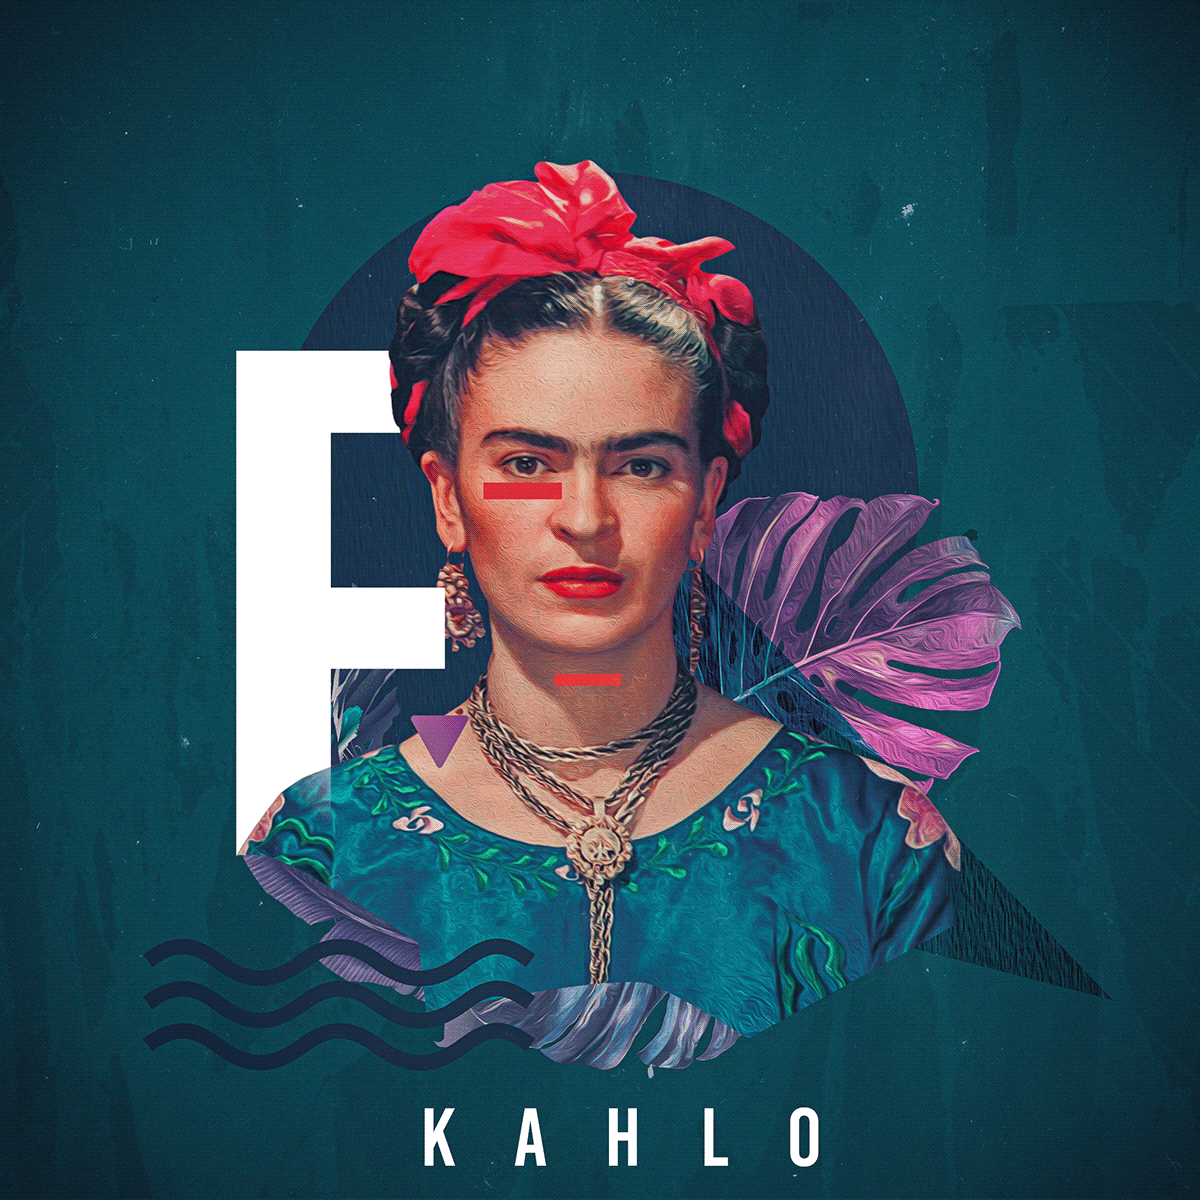 art Cinema collage COVid digital kahlo music Album cover